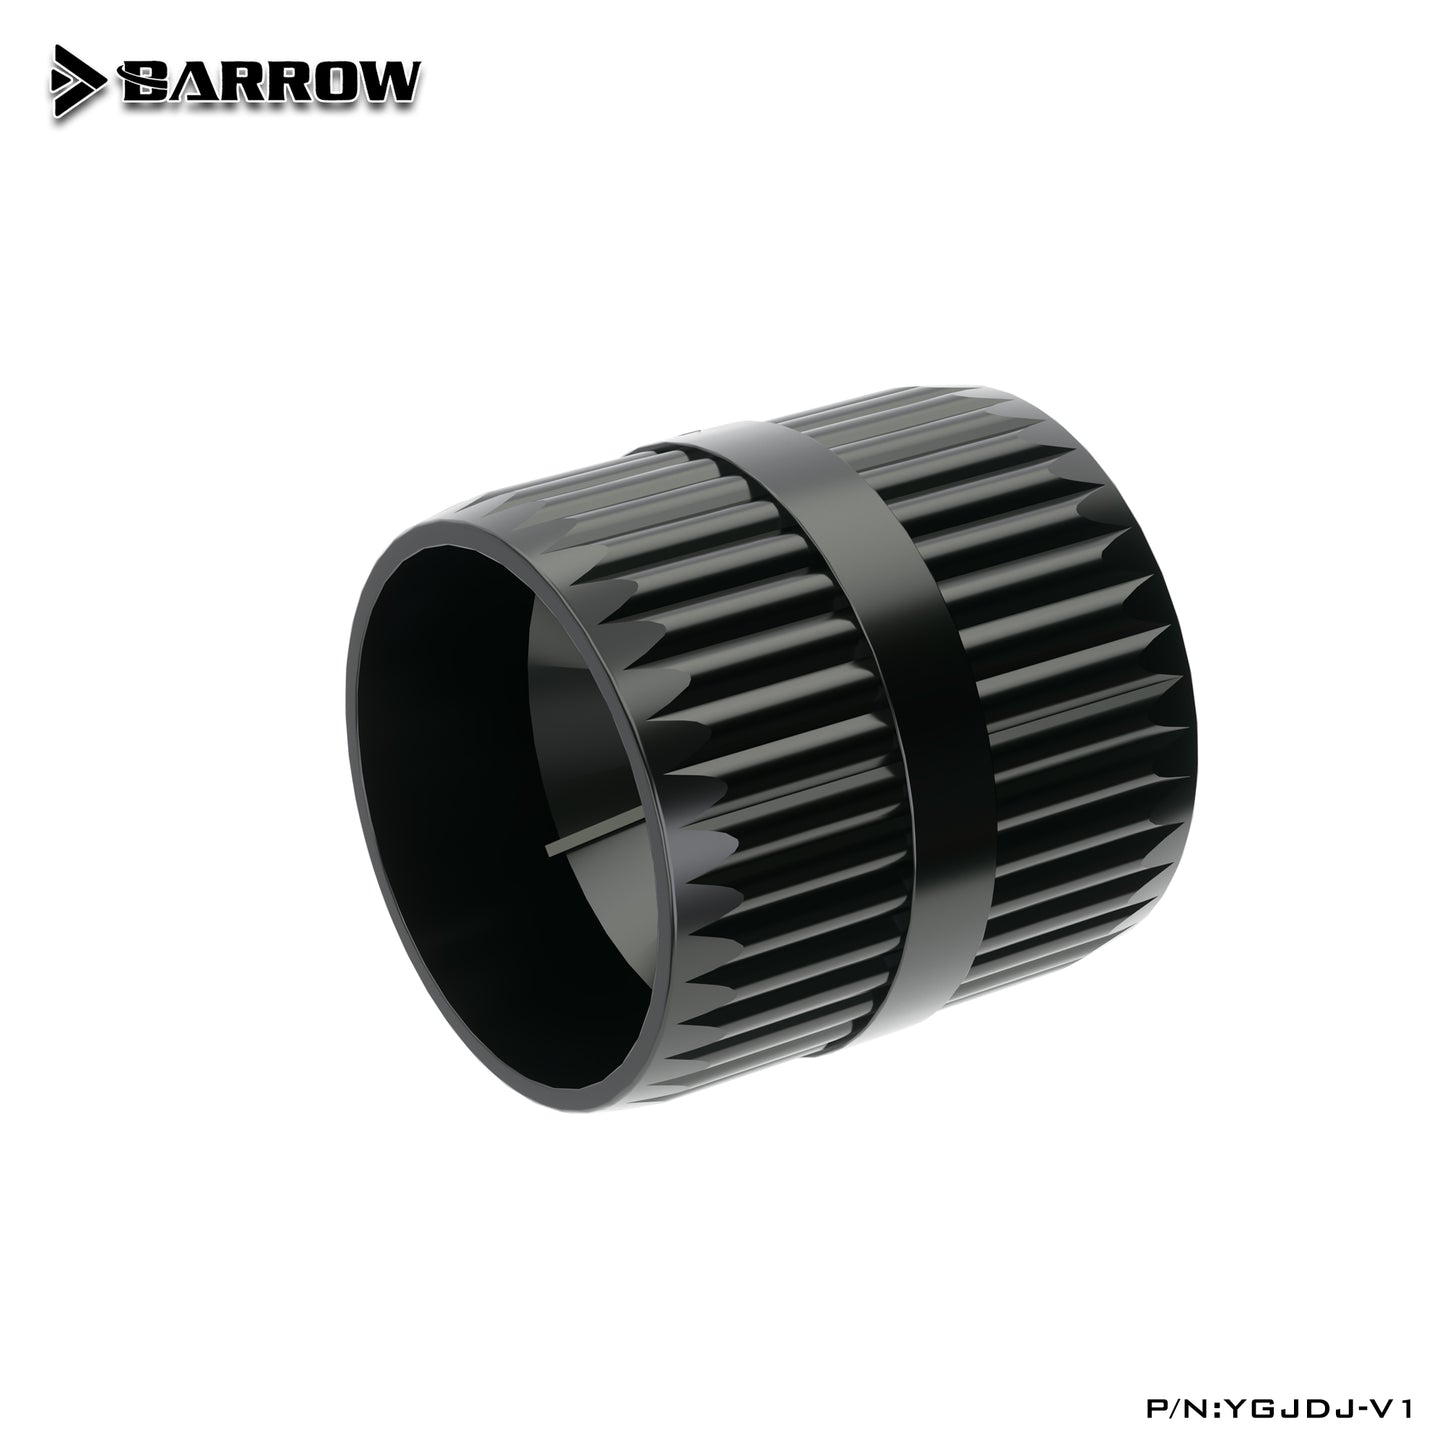 Barrow Tube Chamfering Device, Grinding Tools For Acrylic/ PETG Hard Tube, Remove Spikes Simple Manual Rigid Tube Grinder, YGJDJ-V1